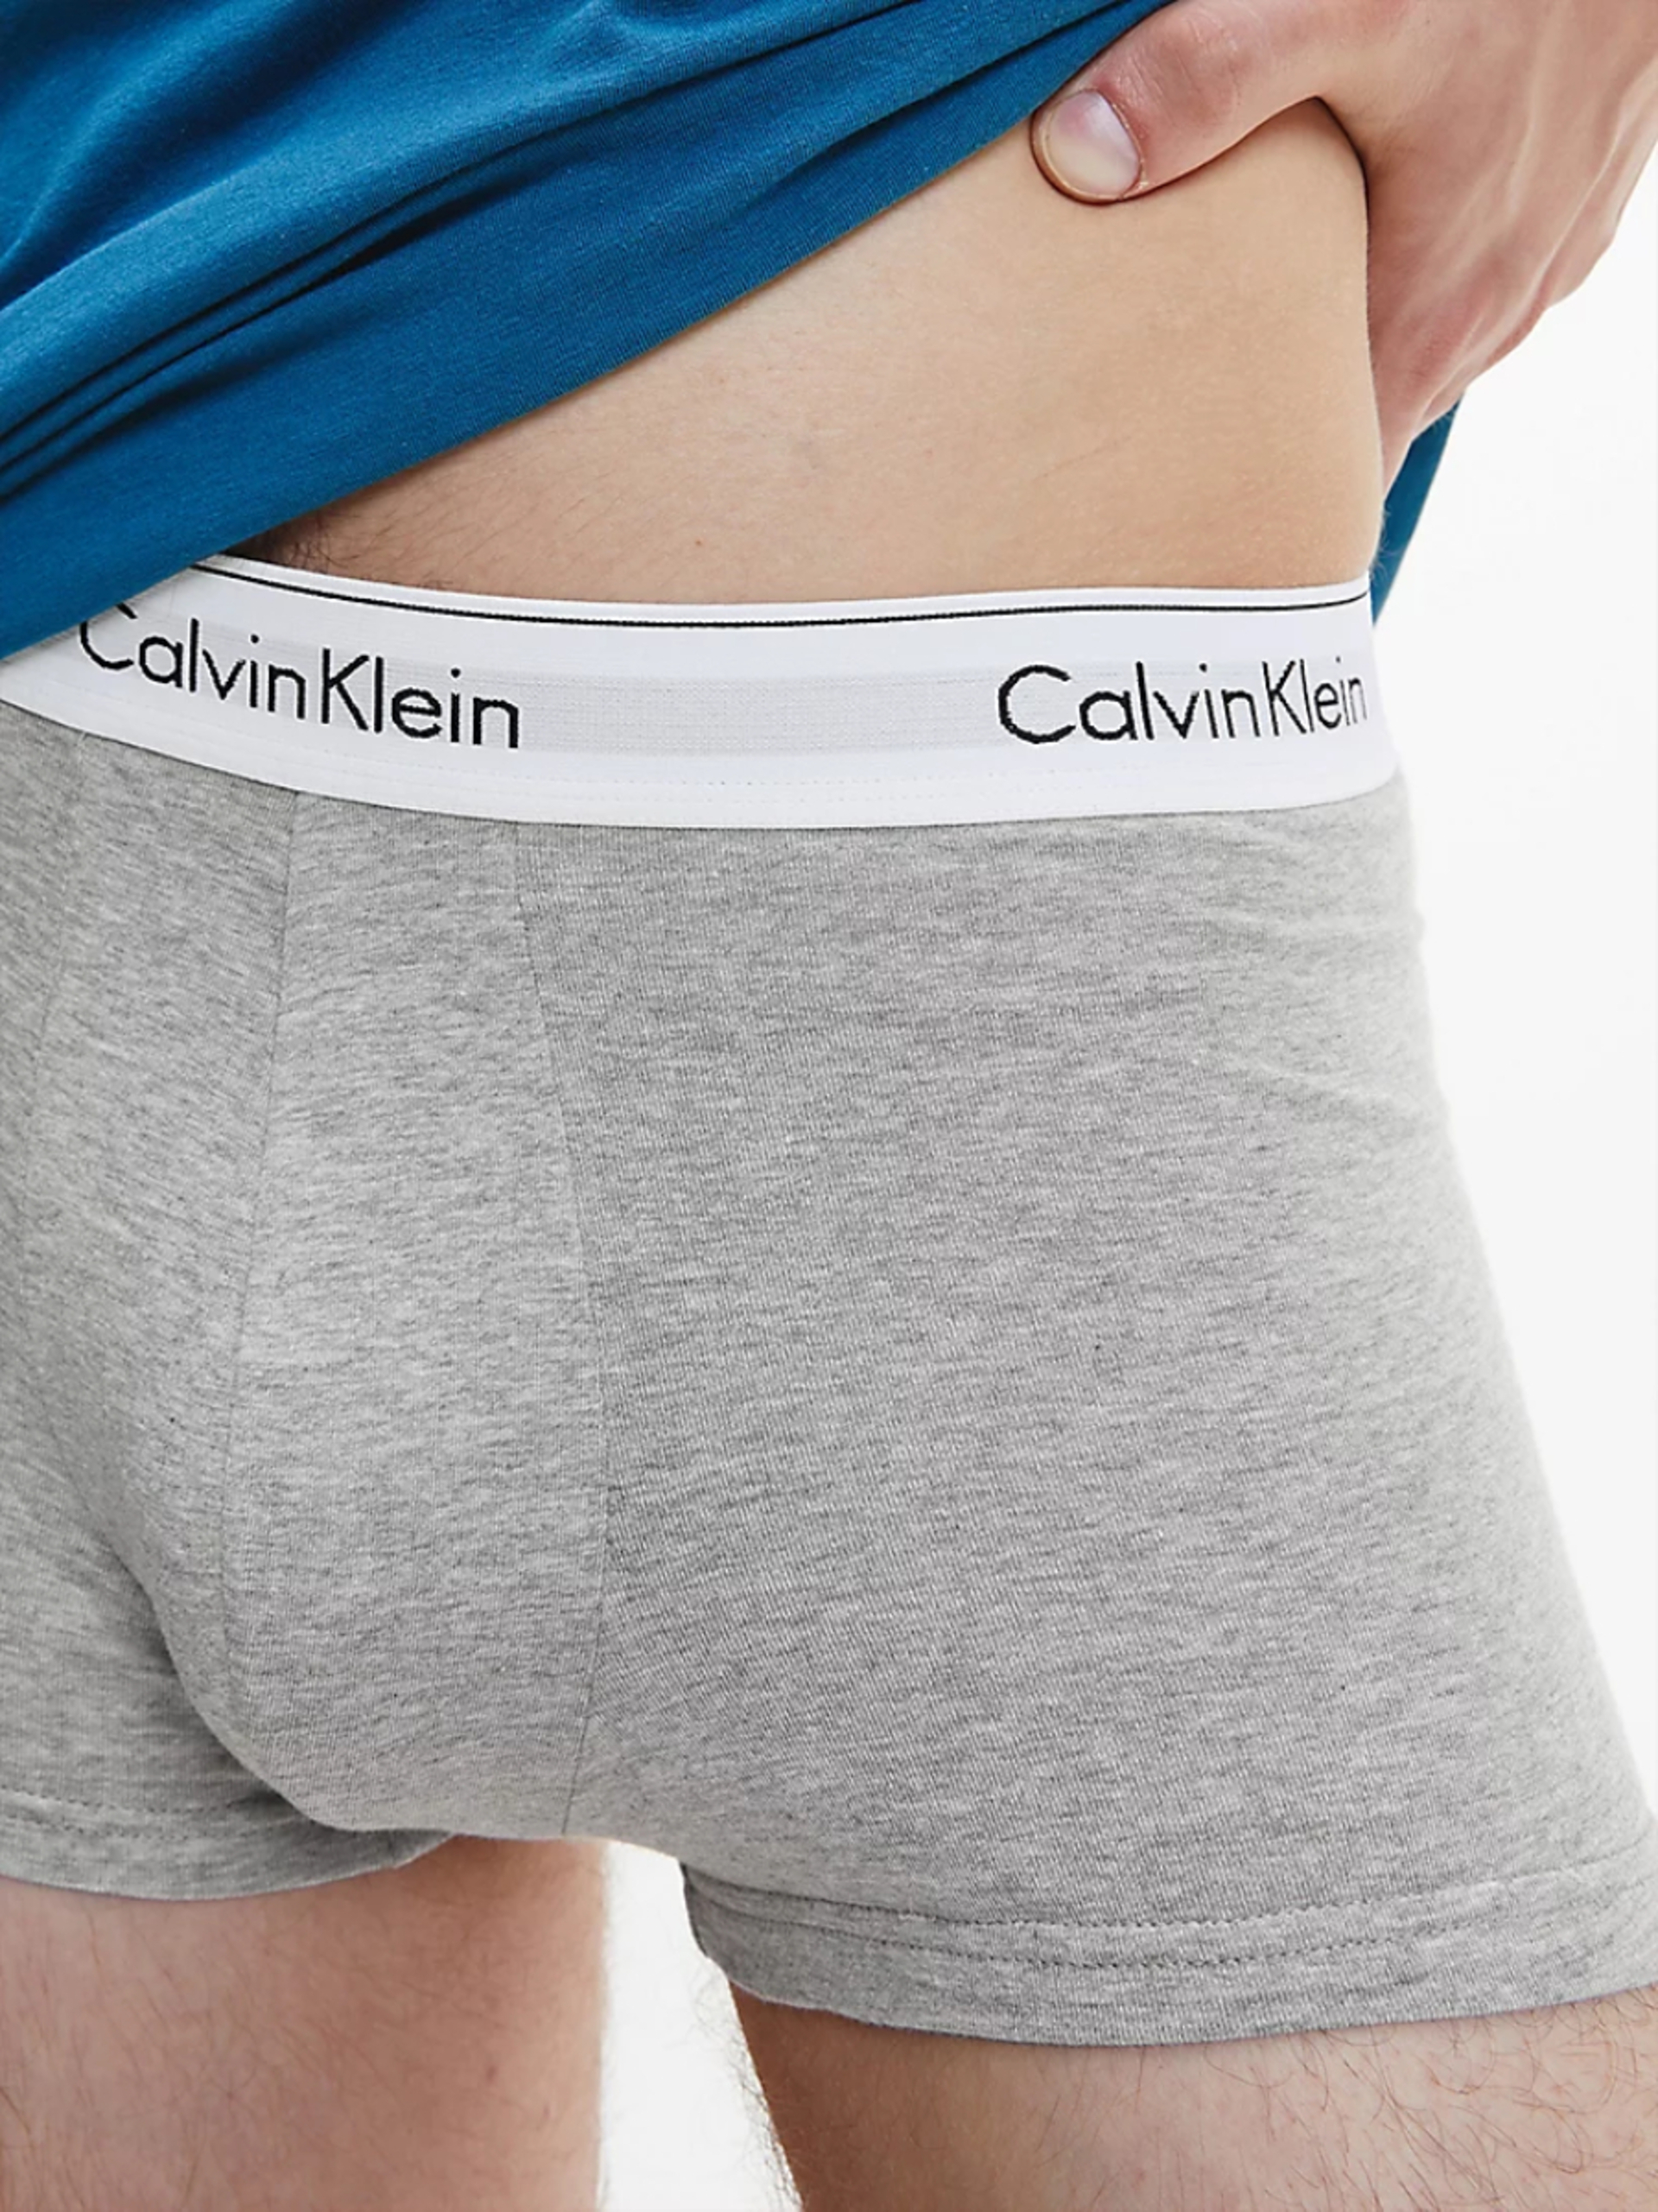 Calvin Klein sada pánských boxerek - M (MP1)